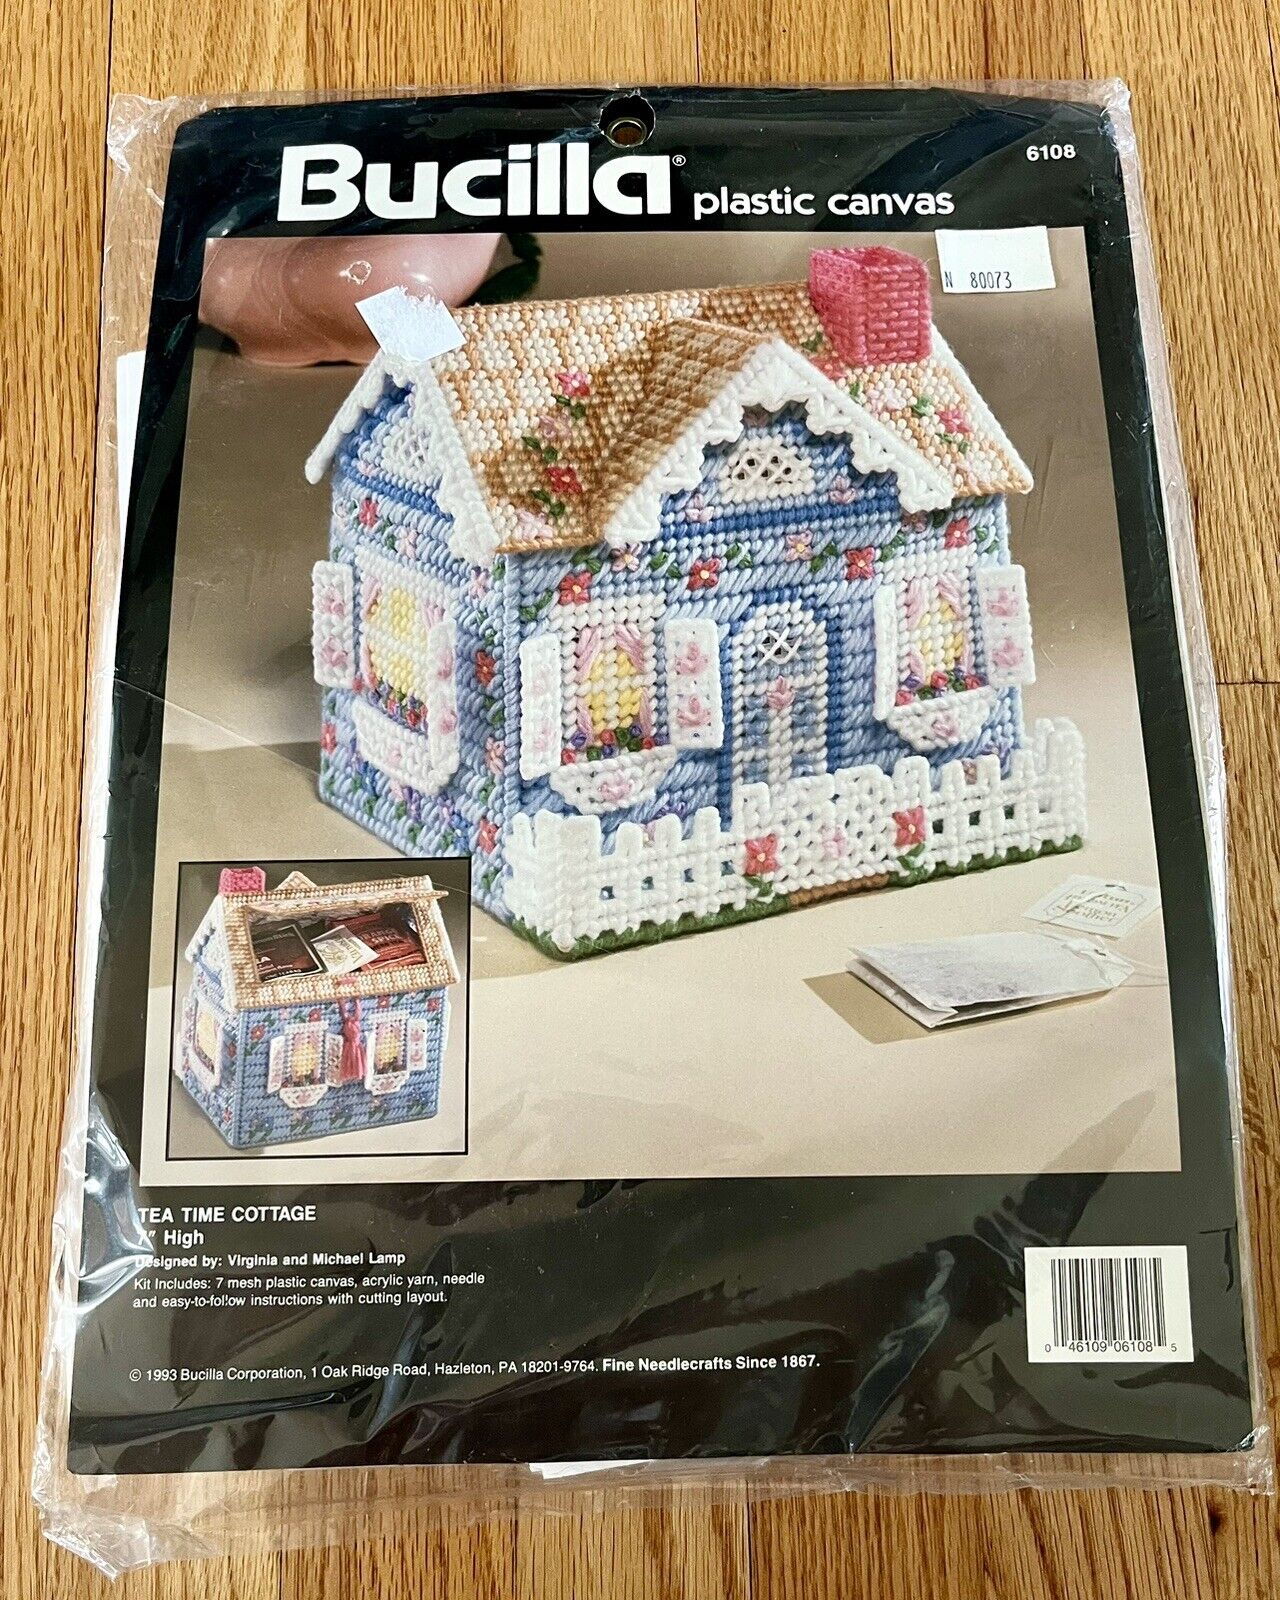 BUCILLA 1993 PLASTIC CANVAS TEA TIME COTTAGE CRAFT KIT 6108 NEW 7” HIGH